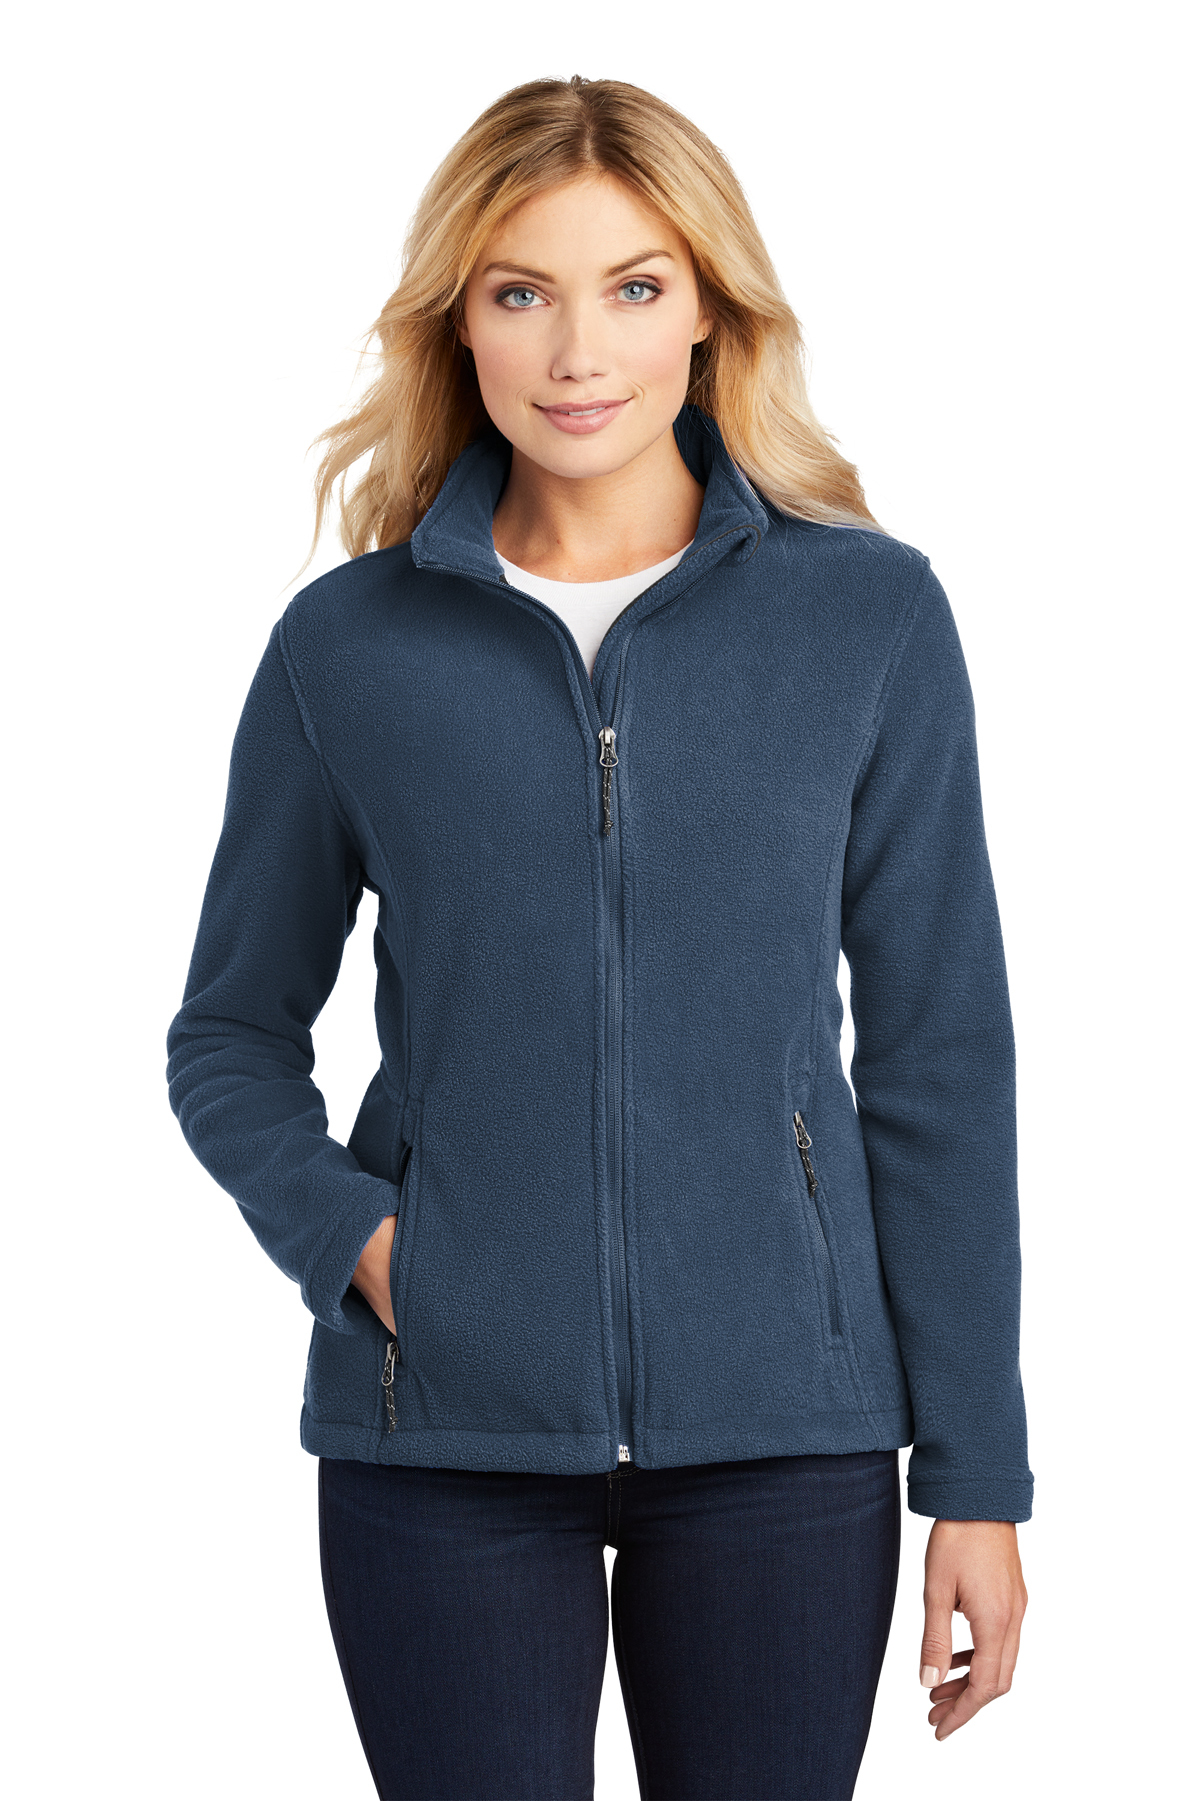 Port Authority Embroidered Women's Value Fleece Jacket | Fleece Apparel ...